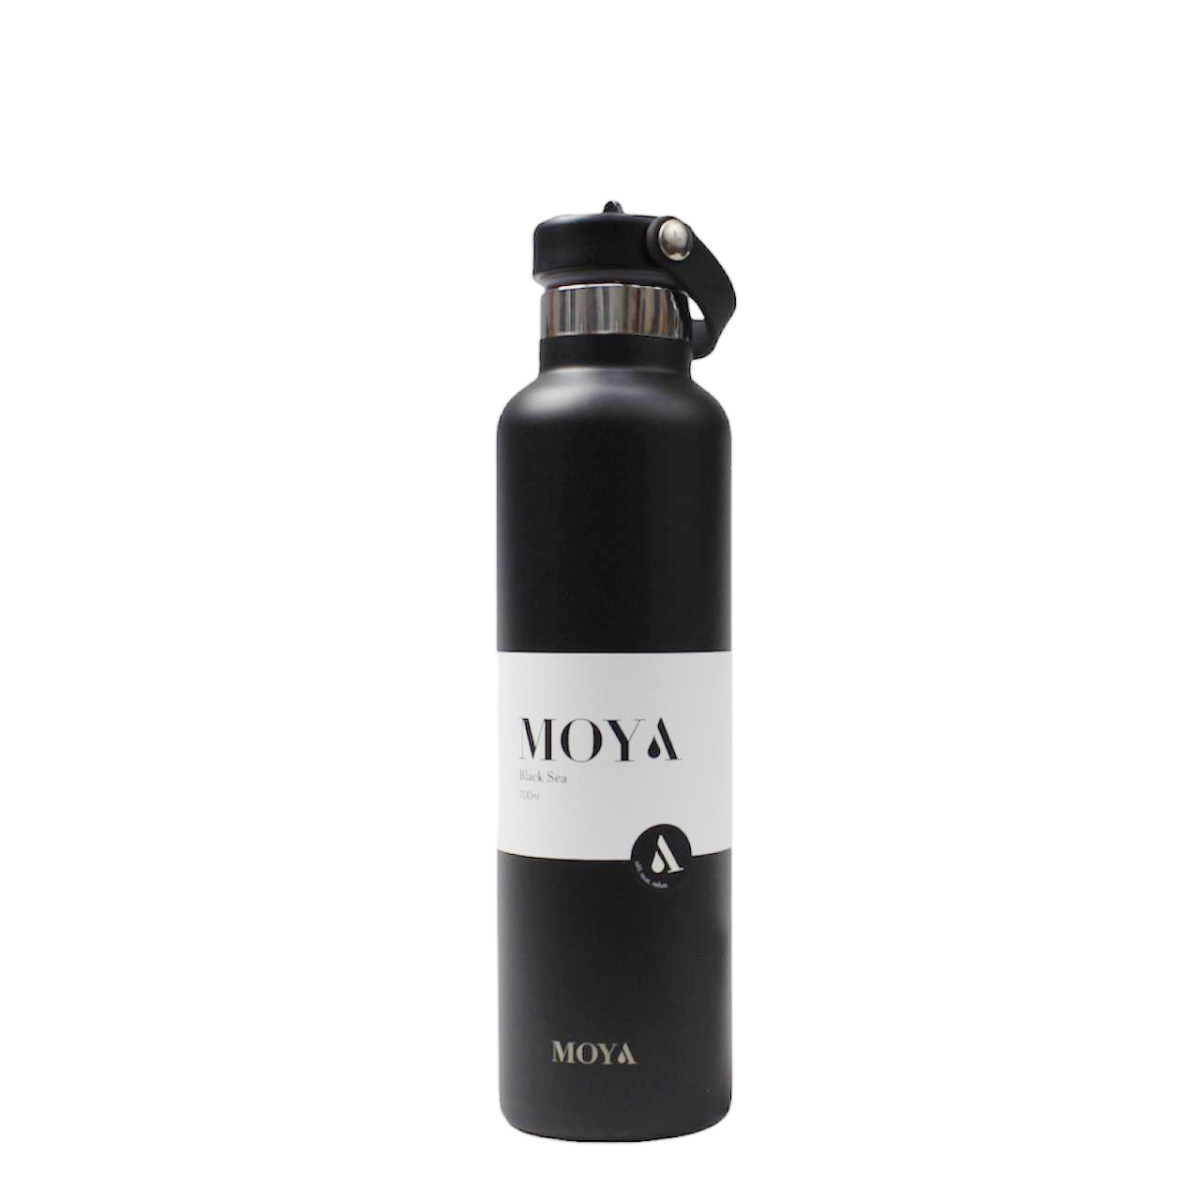 Moya "Black Sea" 700ml Insulated Sustainable Water Bottle Black